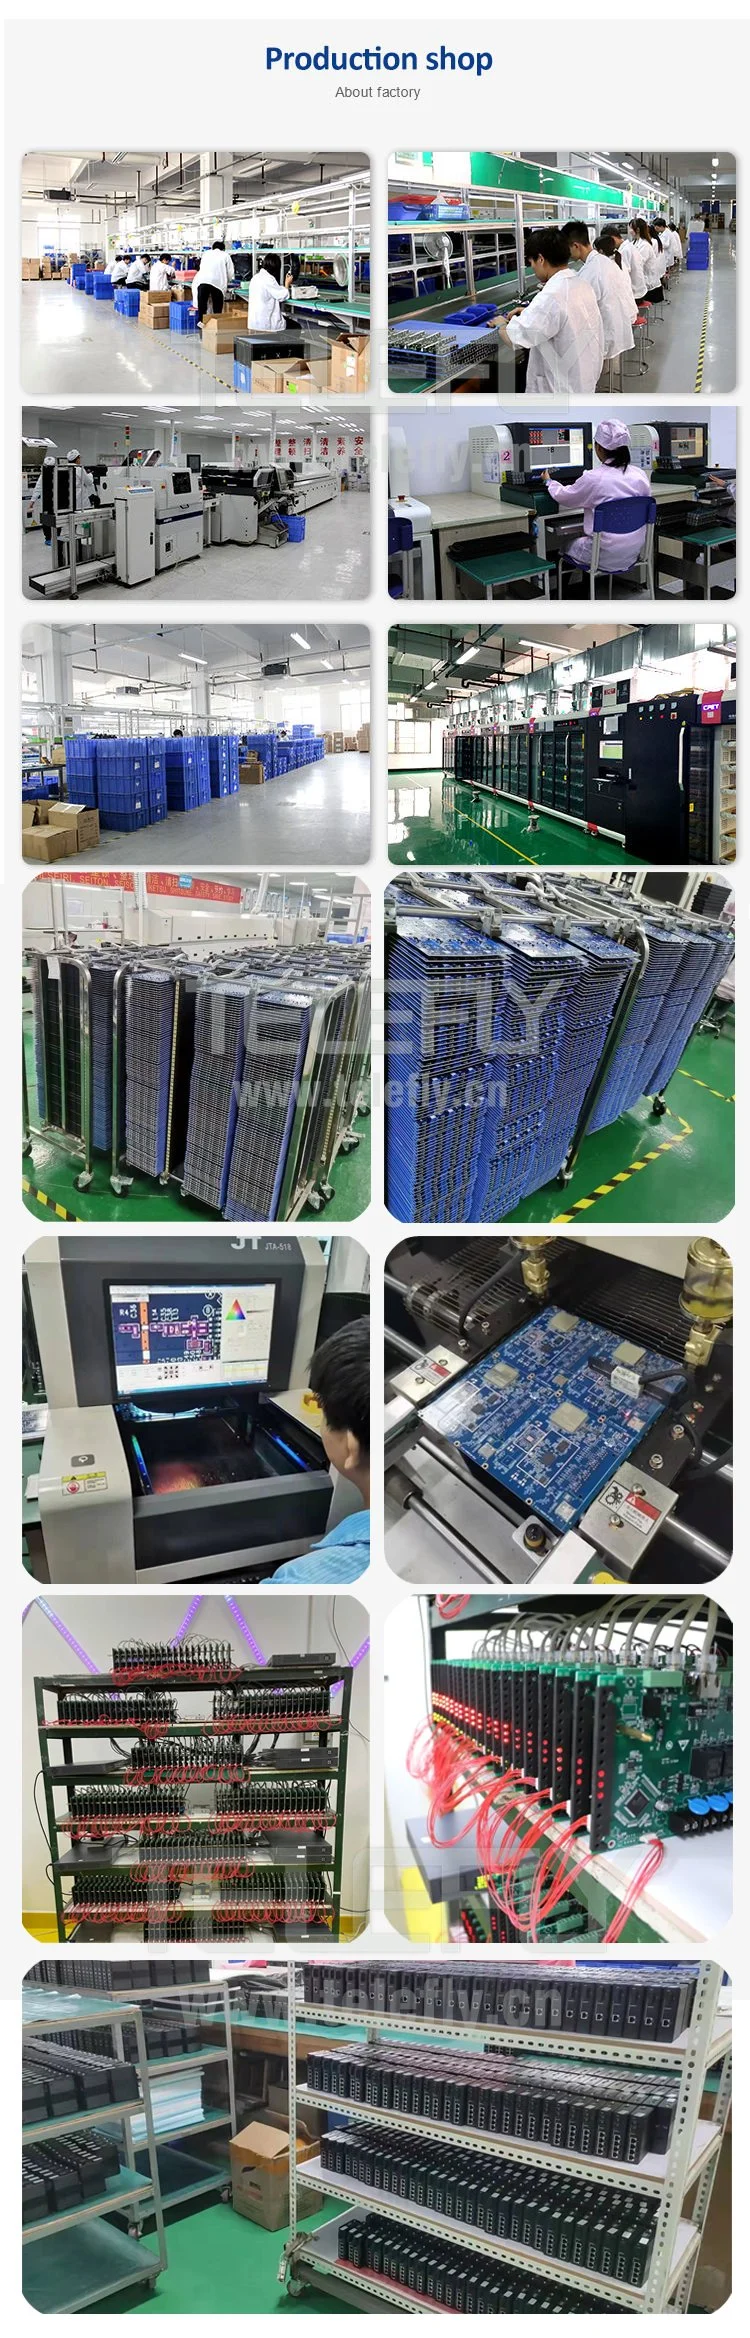 New Original IC Chips Xilinx Xc3s100e-4tqg144c Fpga Spartan-3e Family 100K Gates 2160 Cells 572MHz 90nm (CMOS) Technology 1.2V 144-Pin Tqfp in Stock